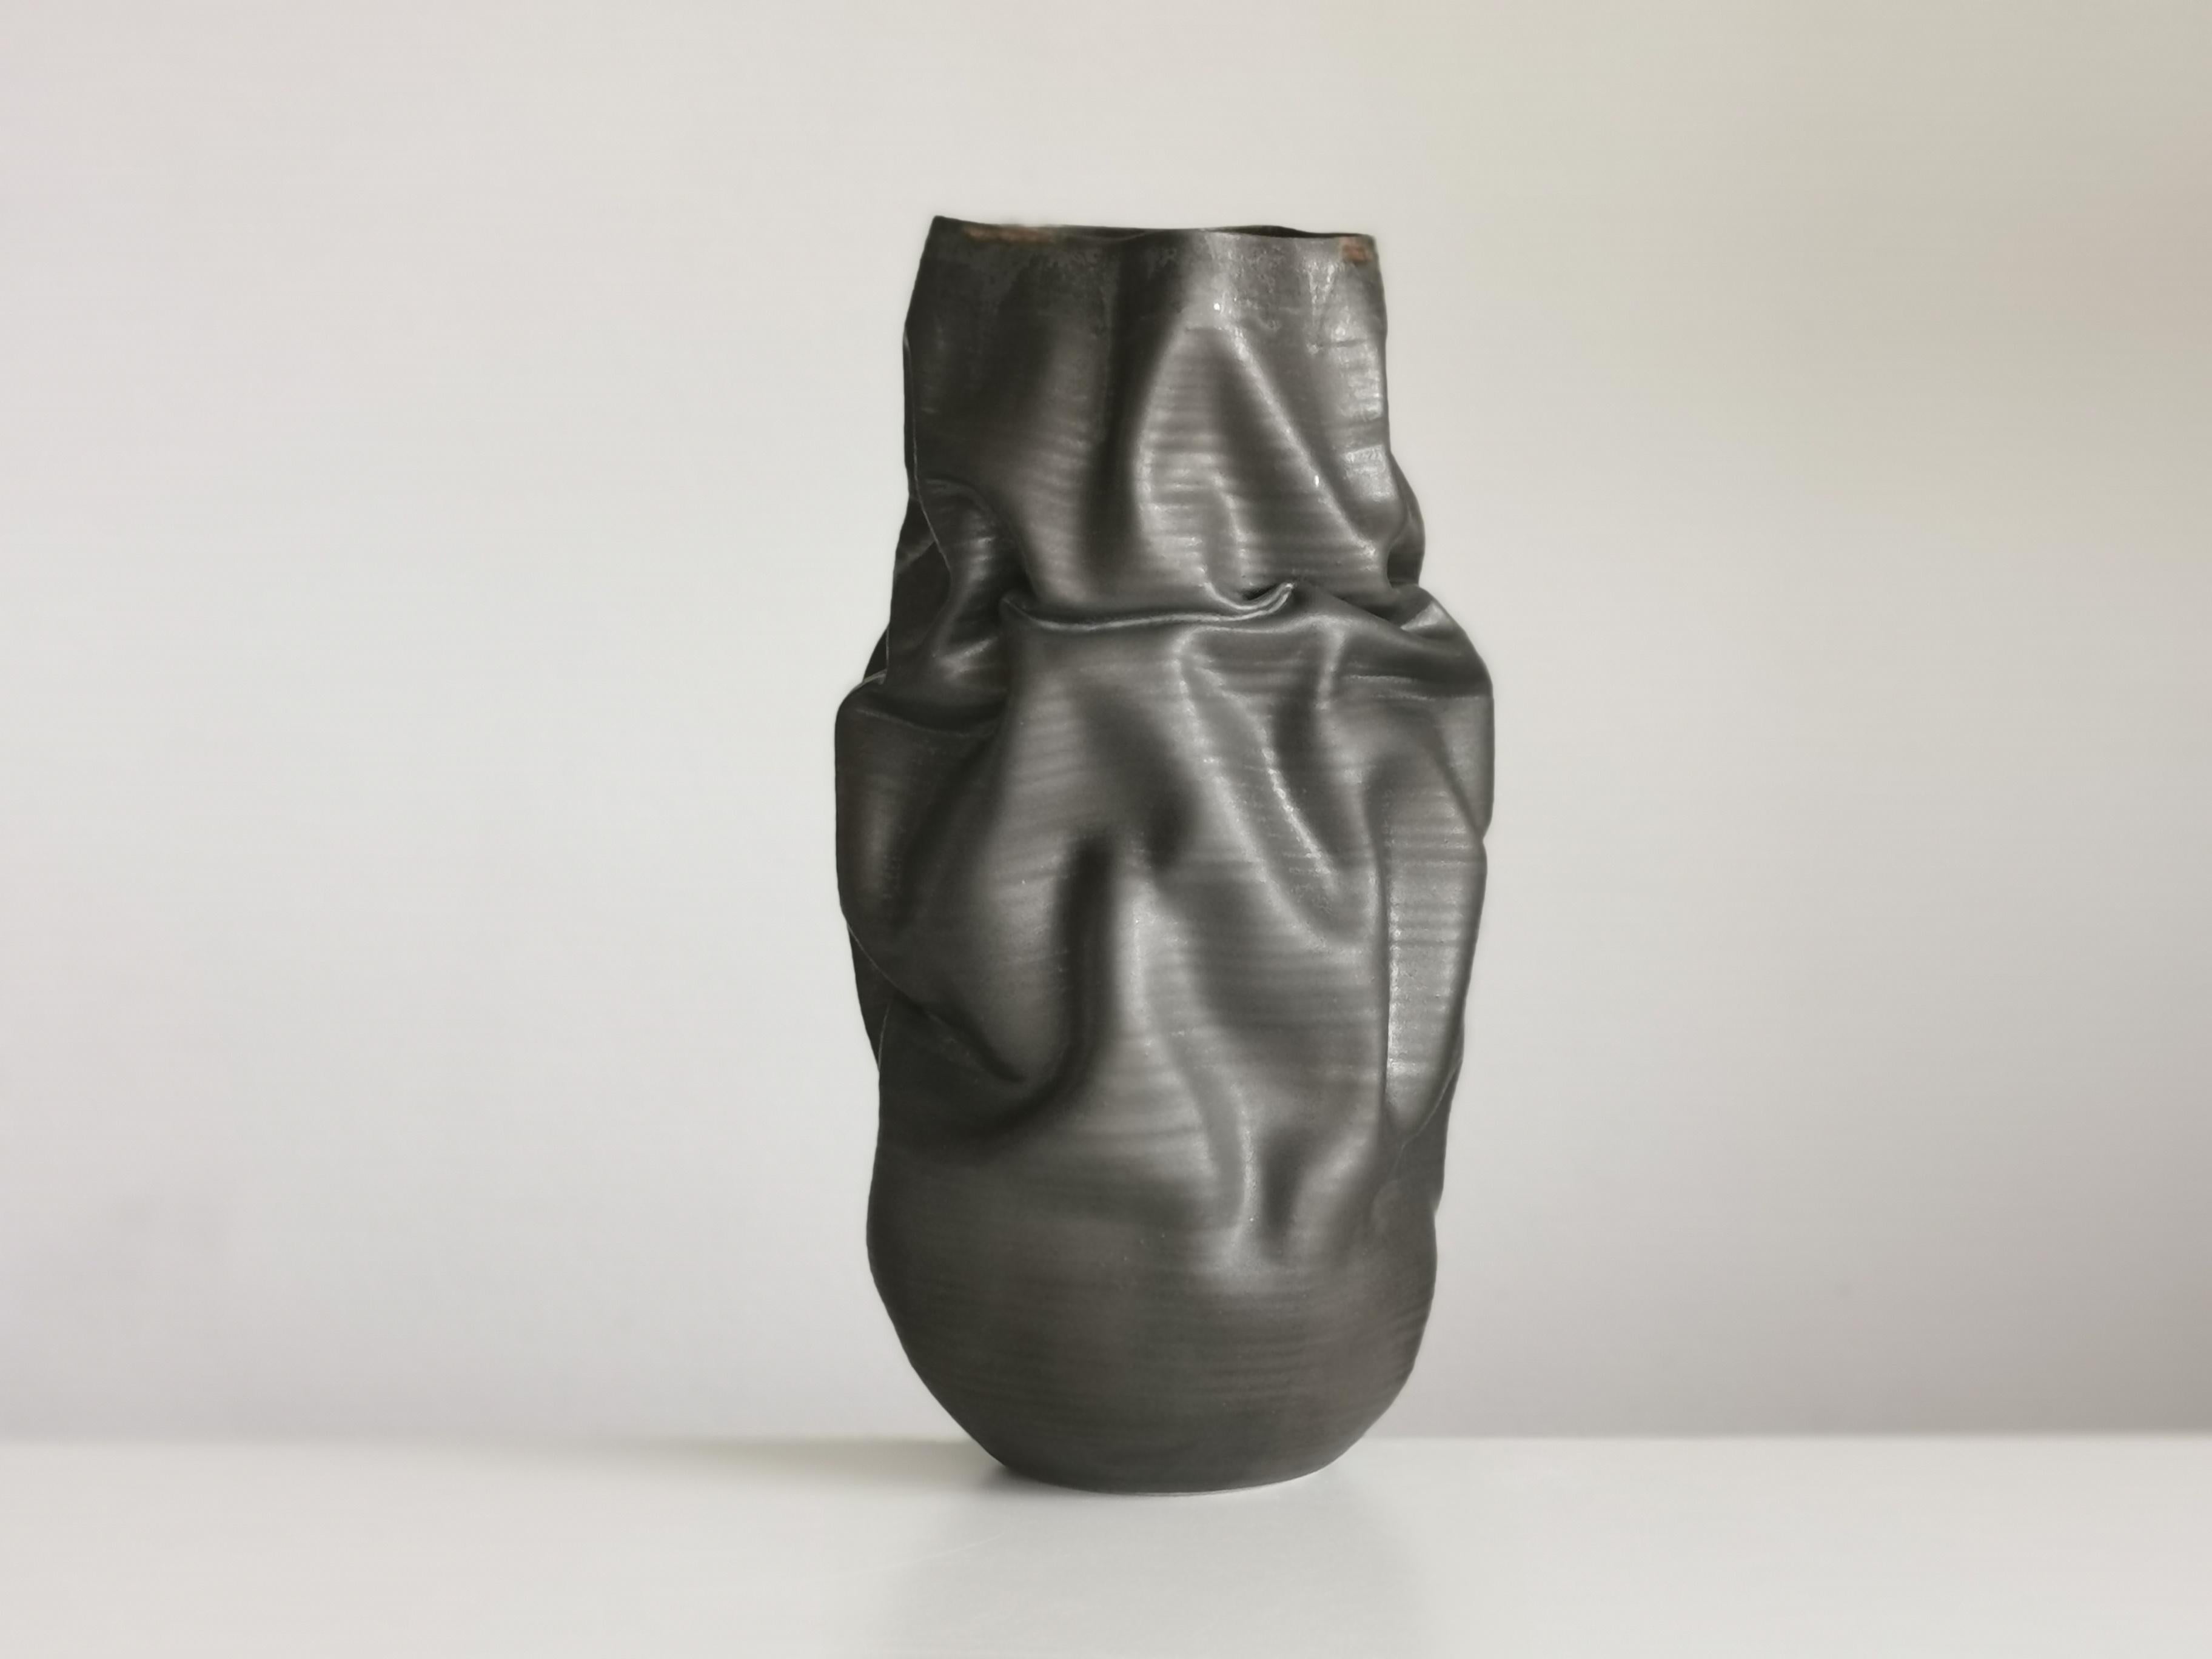 Spanish Tall Black Crumpled Form, Unique Ceramic Sculpture Vessel N.68